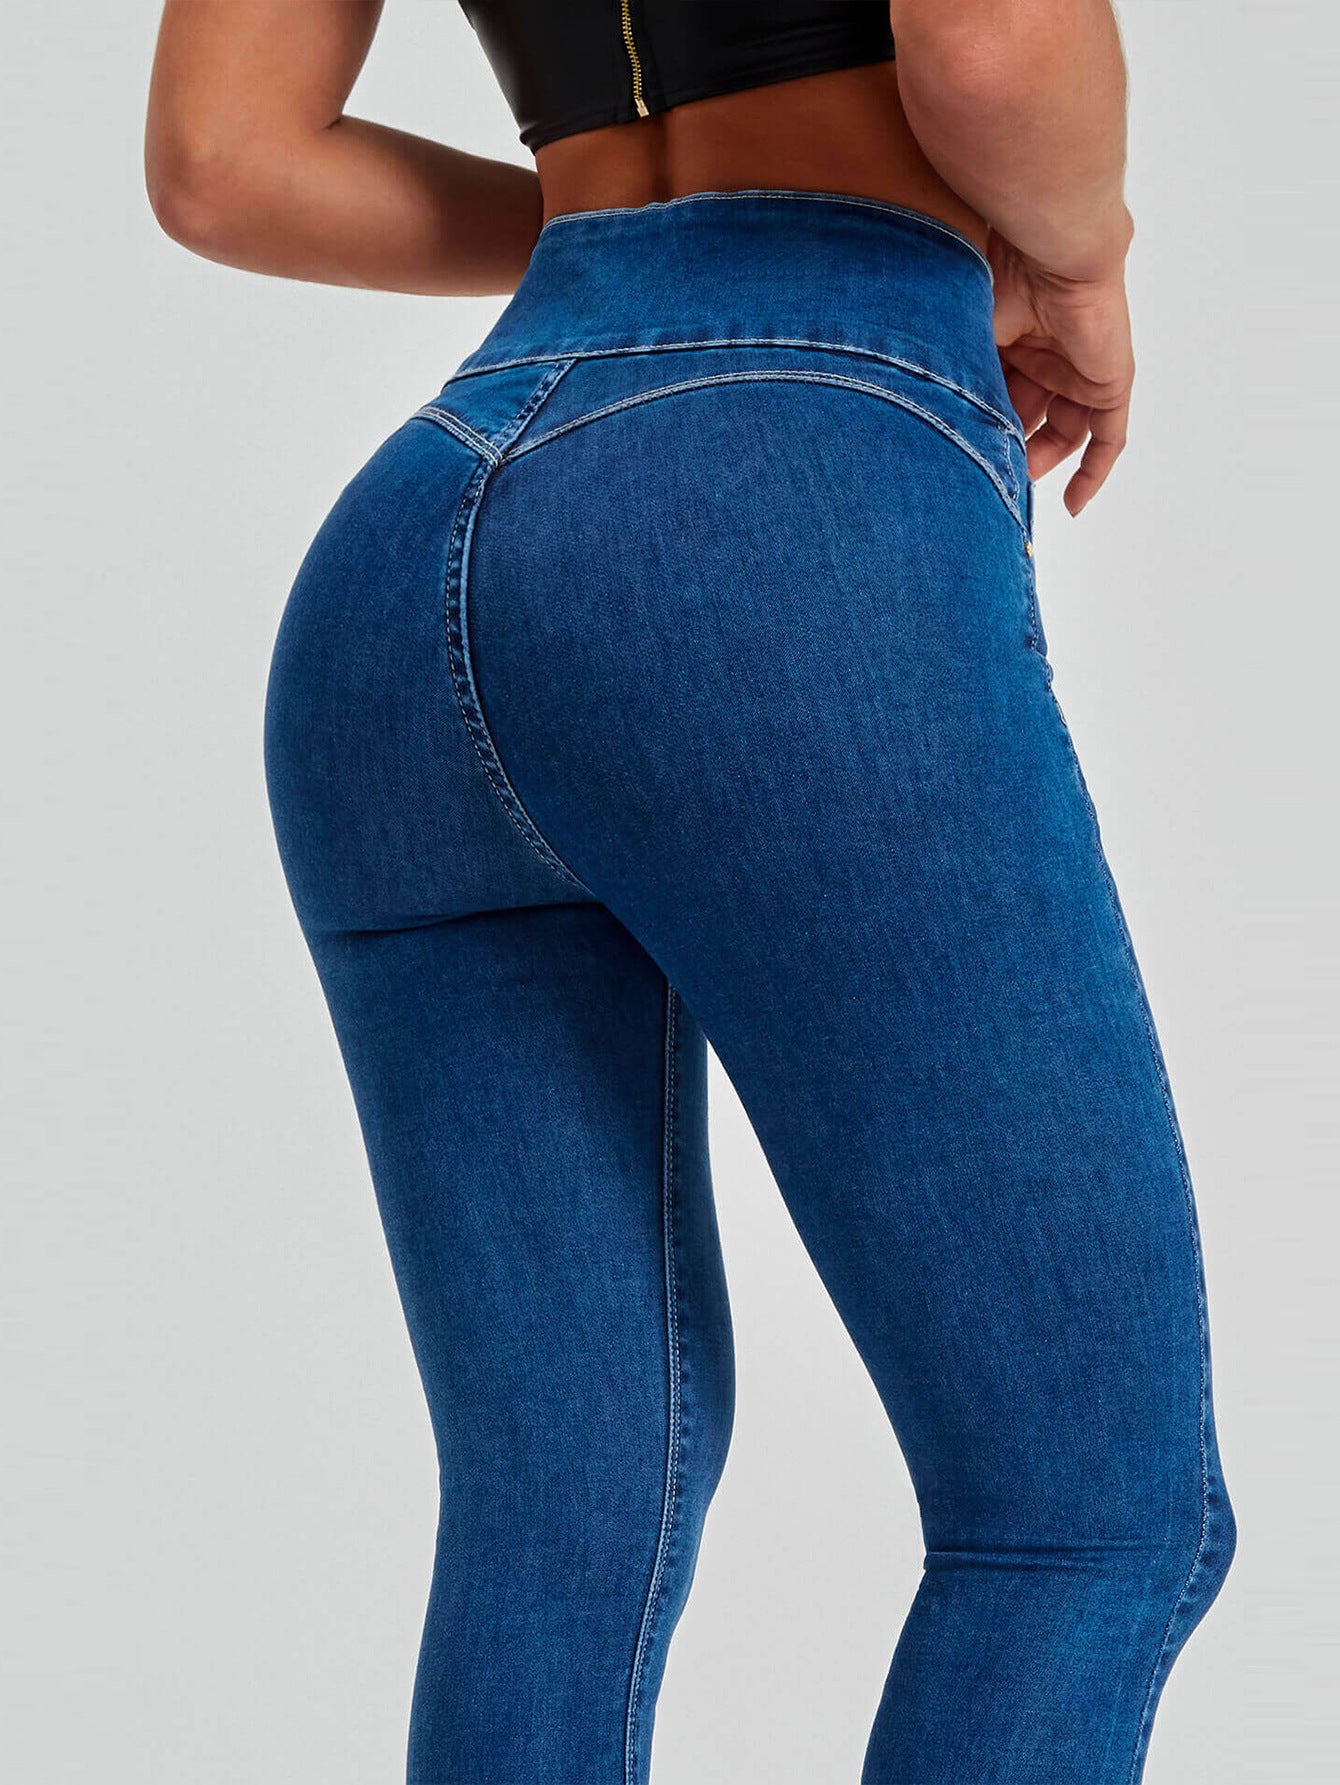 High Waist Slim Stretch Bell Bottom Jeans for Women